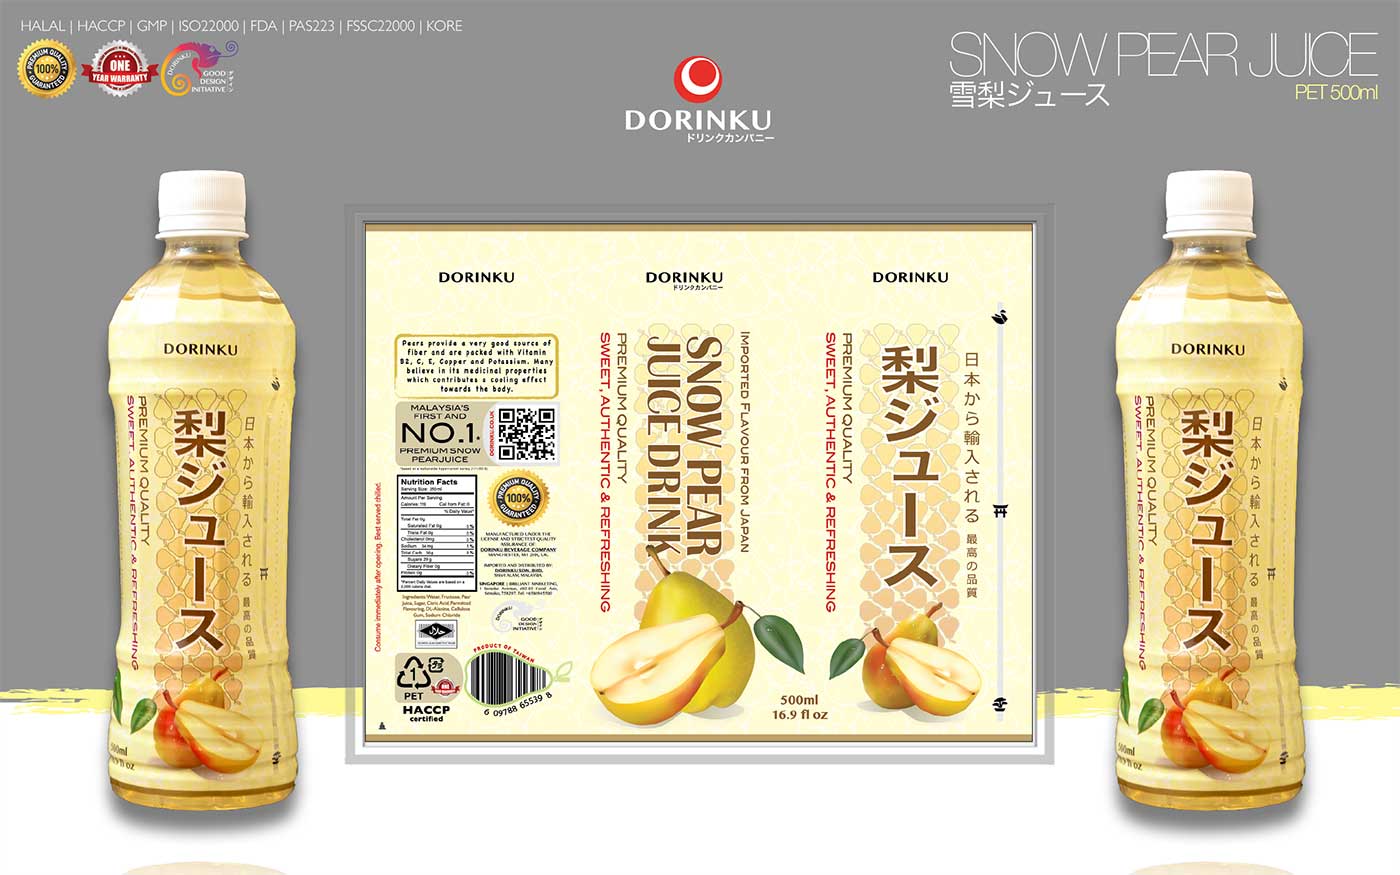 Snow Pear Juice